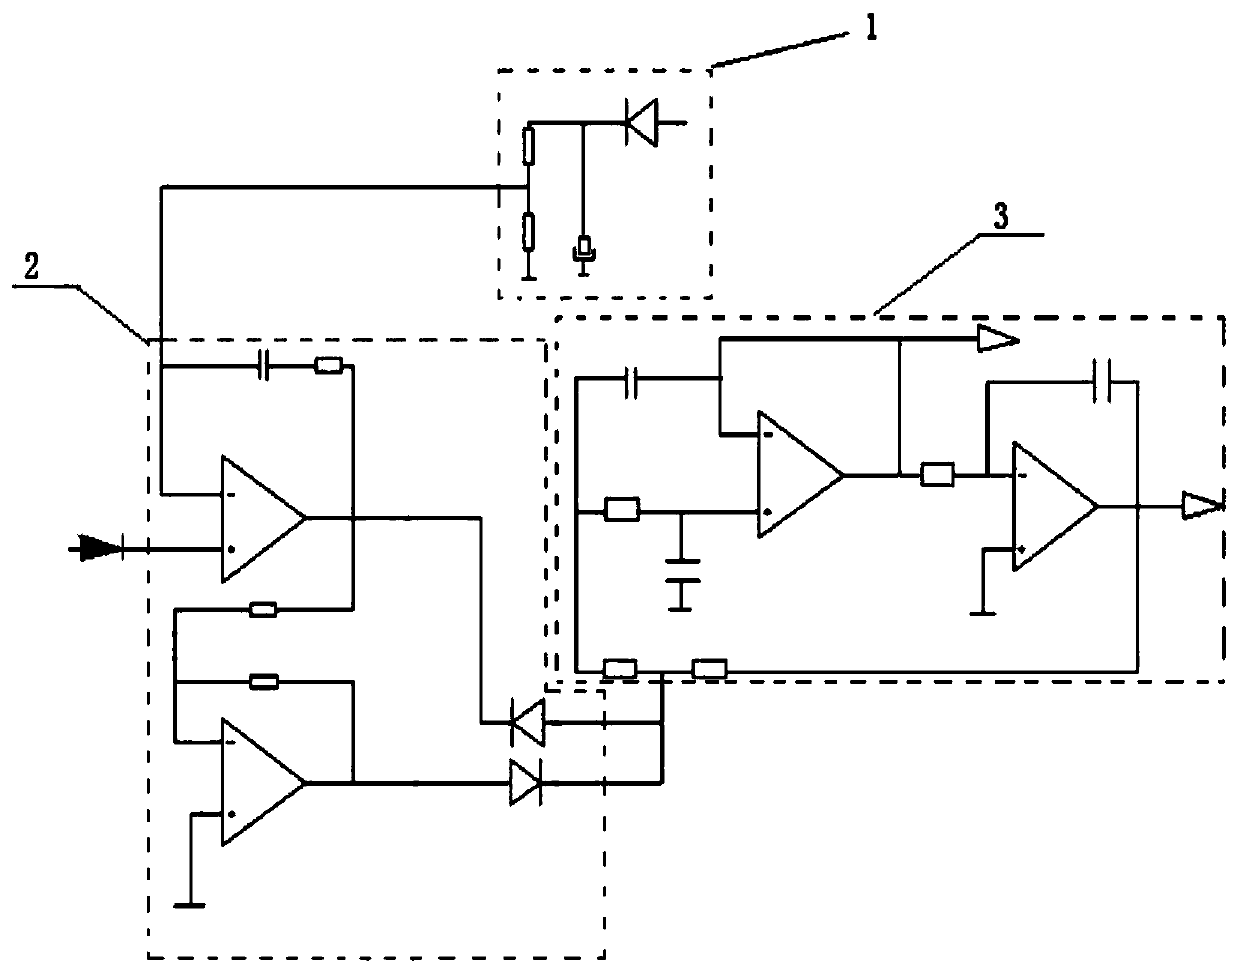 An RC sine wave oscillator output voltage regulation and control circuit